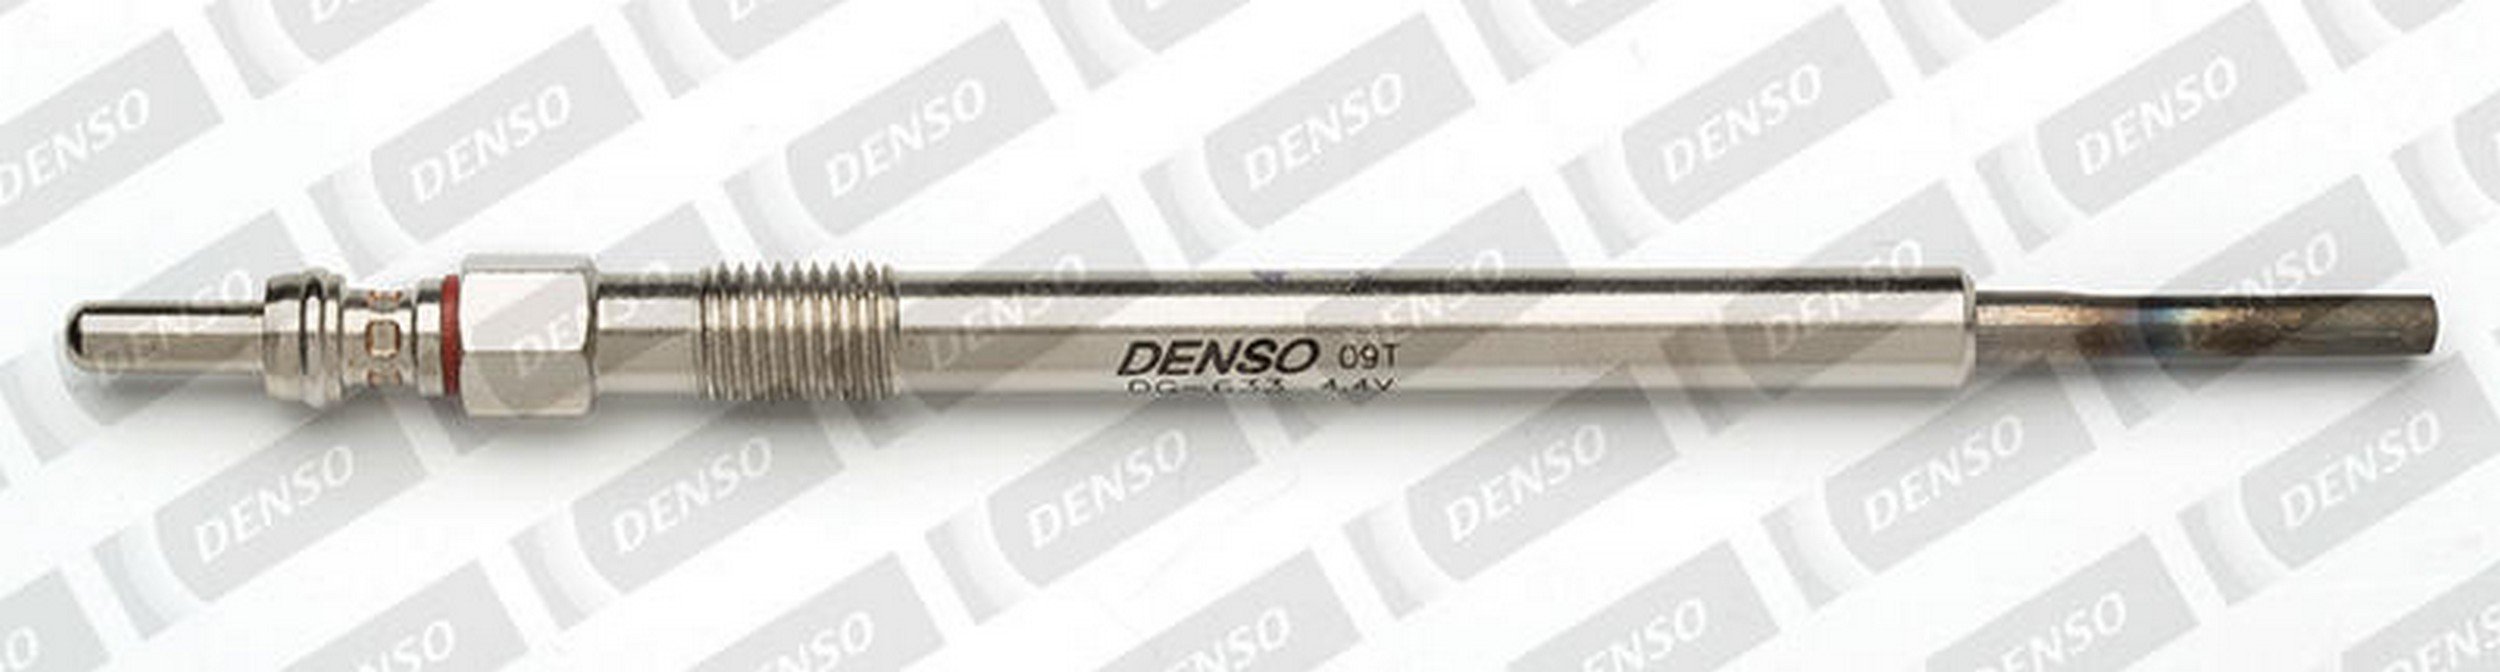 DENSO-AU DG-633